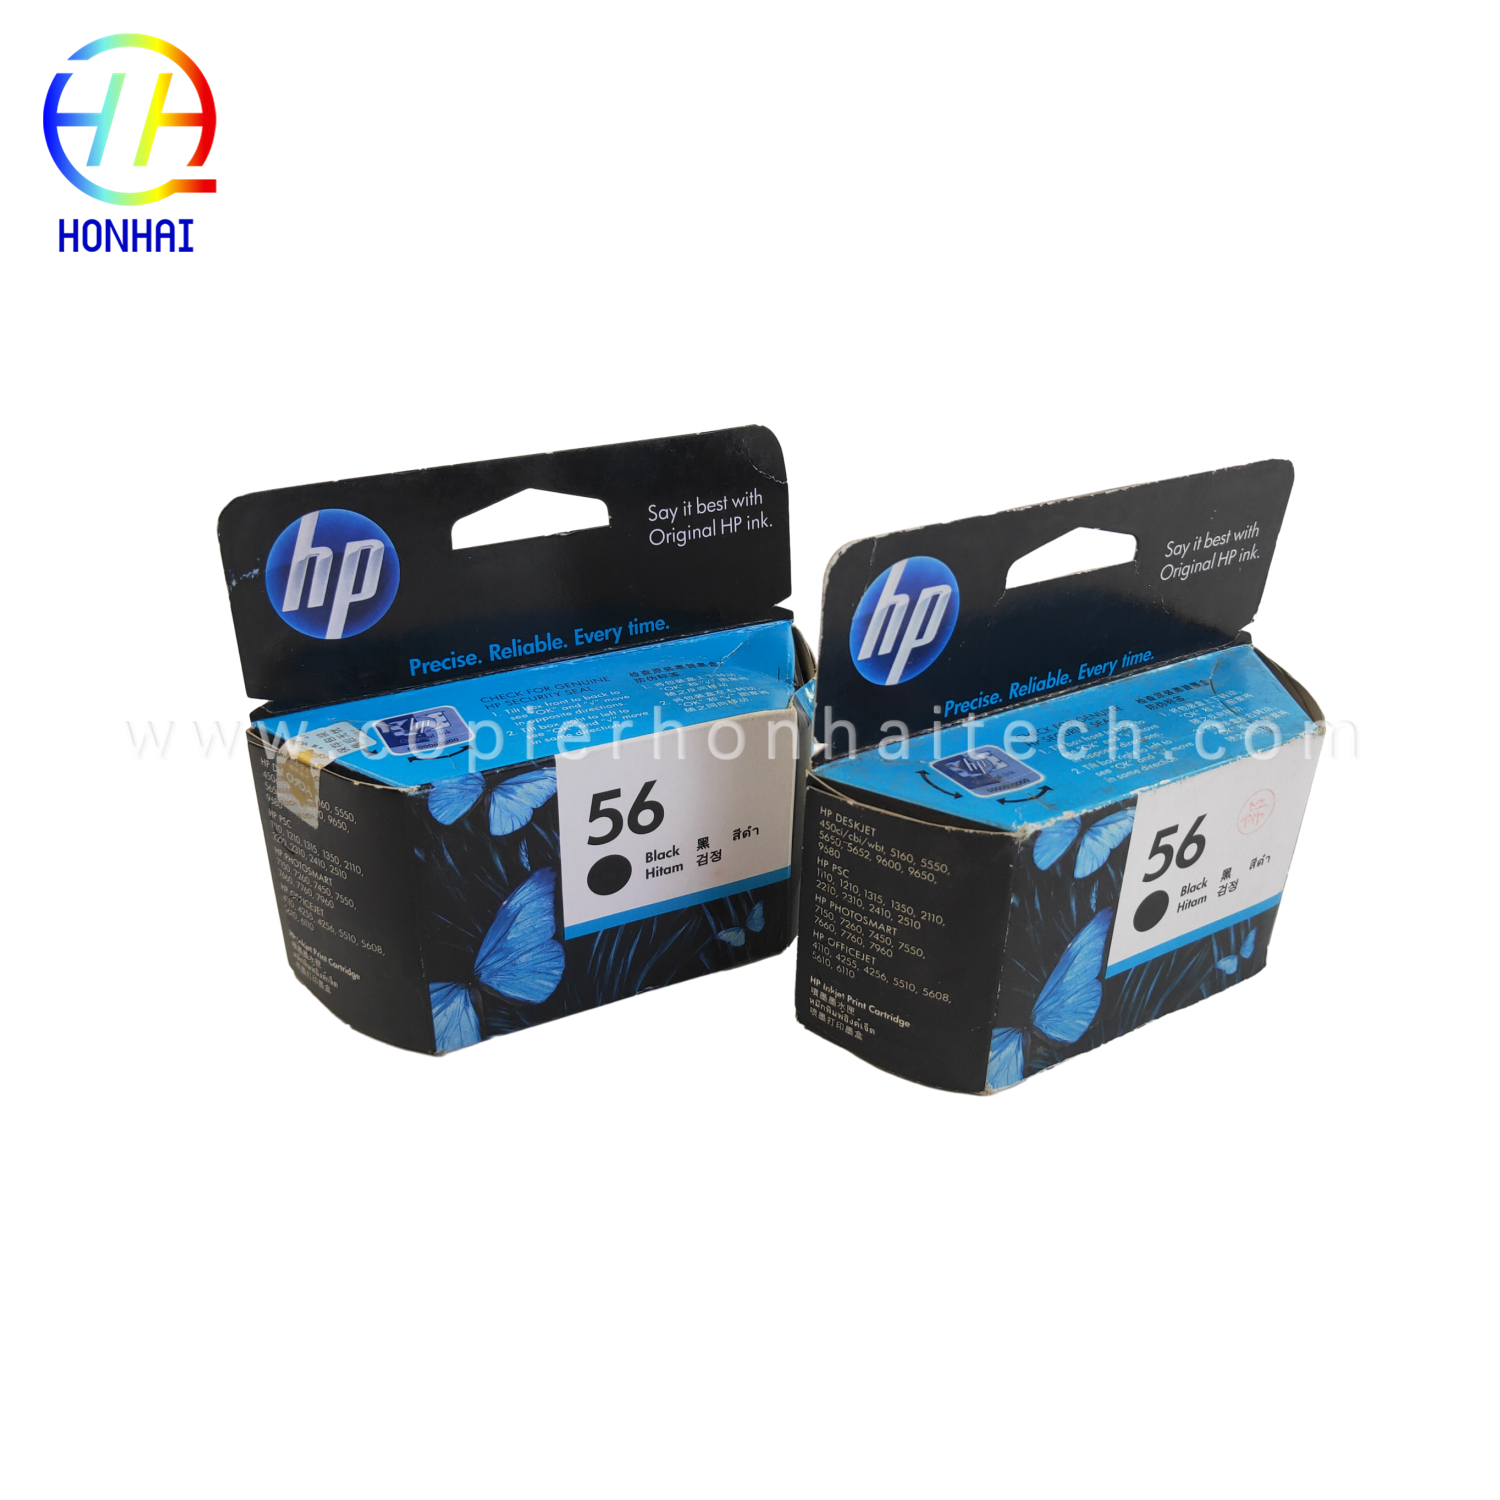 Kartrij Dakwat Pencetak Hitam Asal 56 untuk HP Deskjet 5550 5551 5552